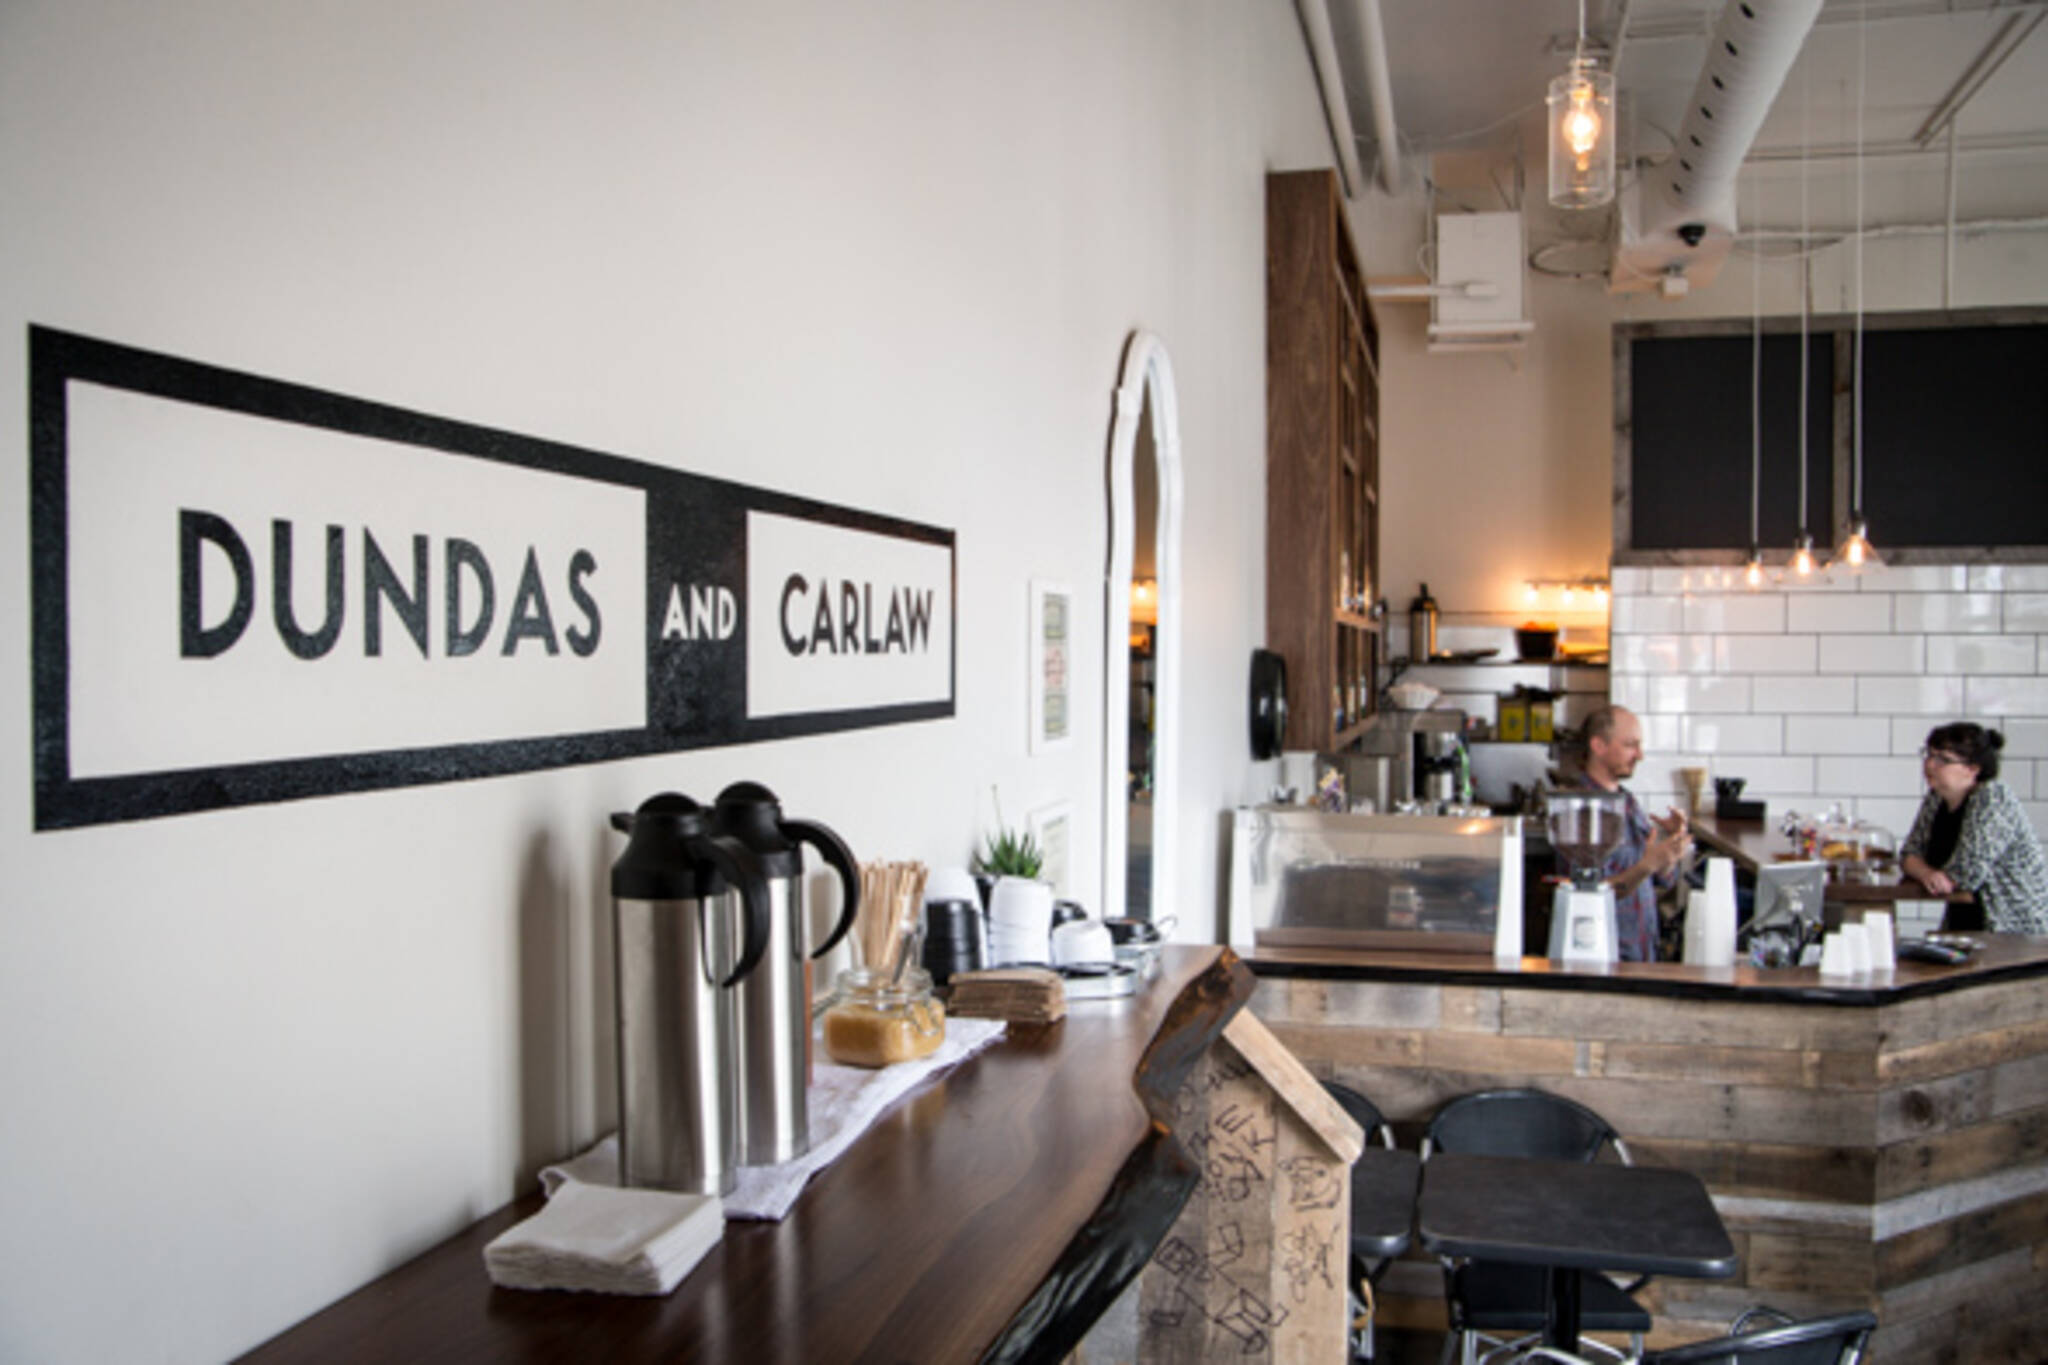 Dundas and Carlaw cafe Toronto